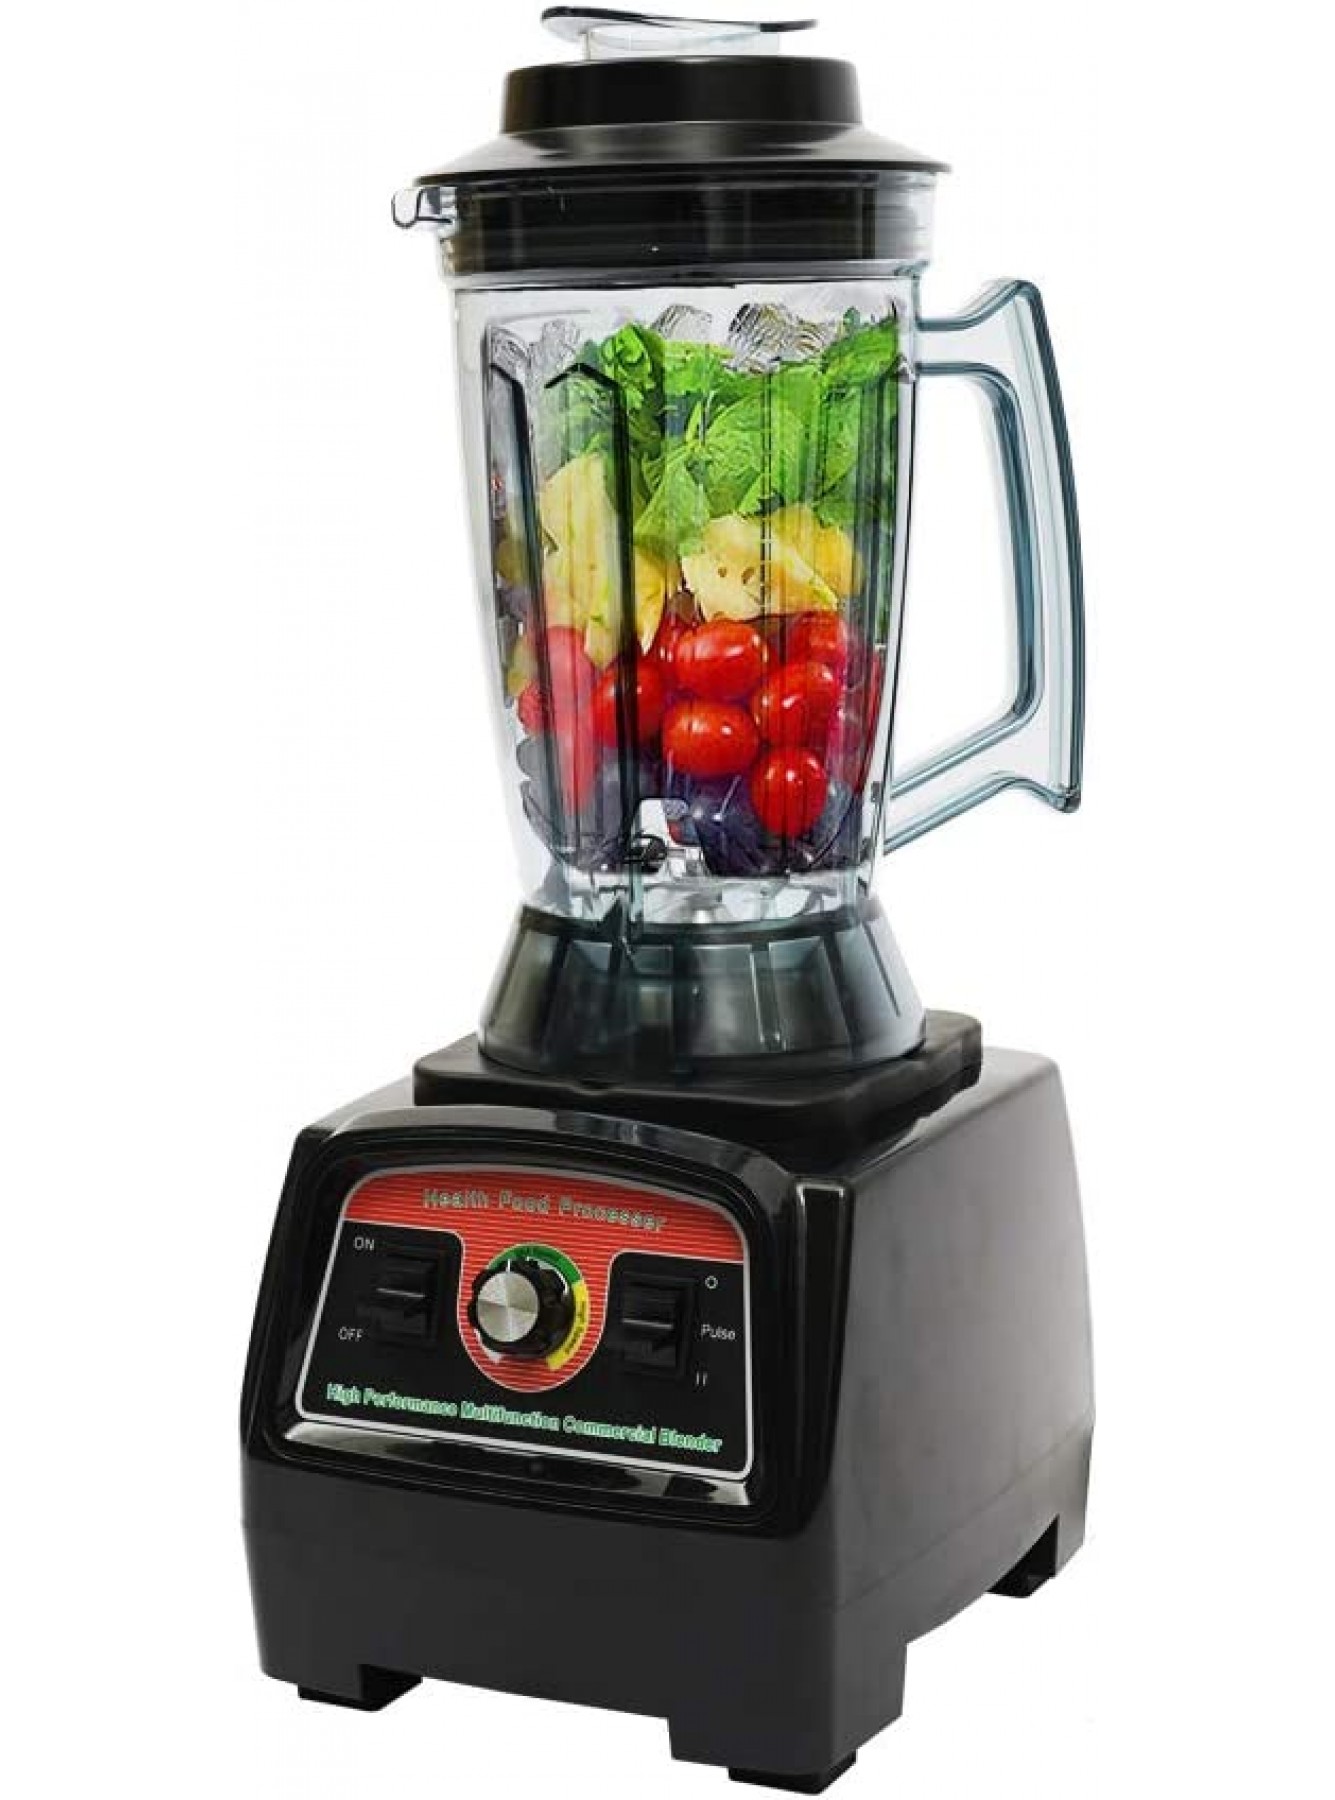 2800W Heavy Duty Countertop Blender Mixer Juicer Fruit Vegetable Ice Mixer Fresh Drink Blender Food Processor Machine 57000-peak 3.9L Capacity Home Kitchen Household Appliance B07QFJ1DHP